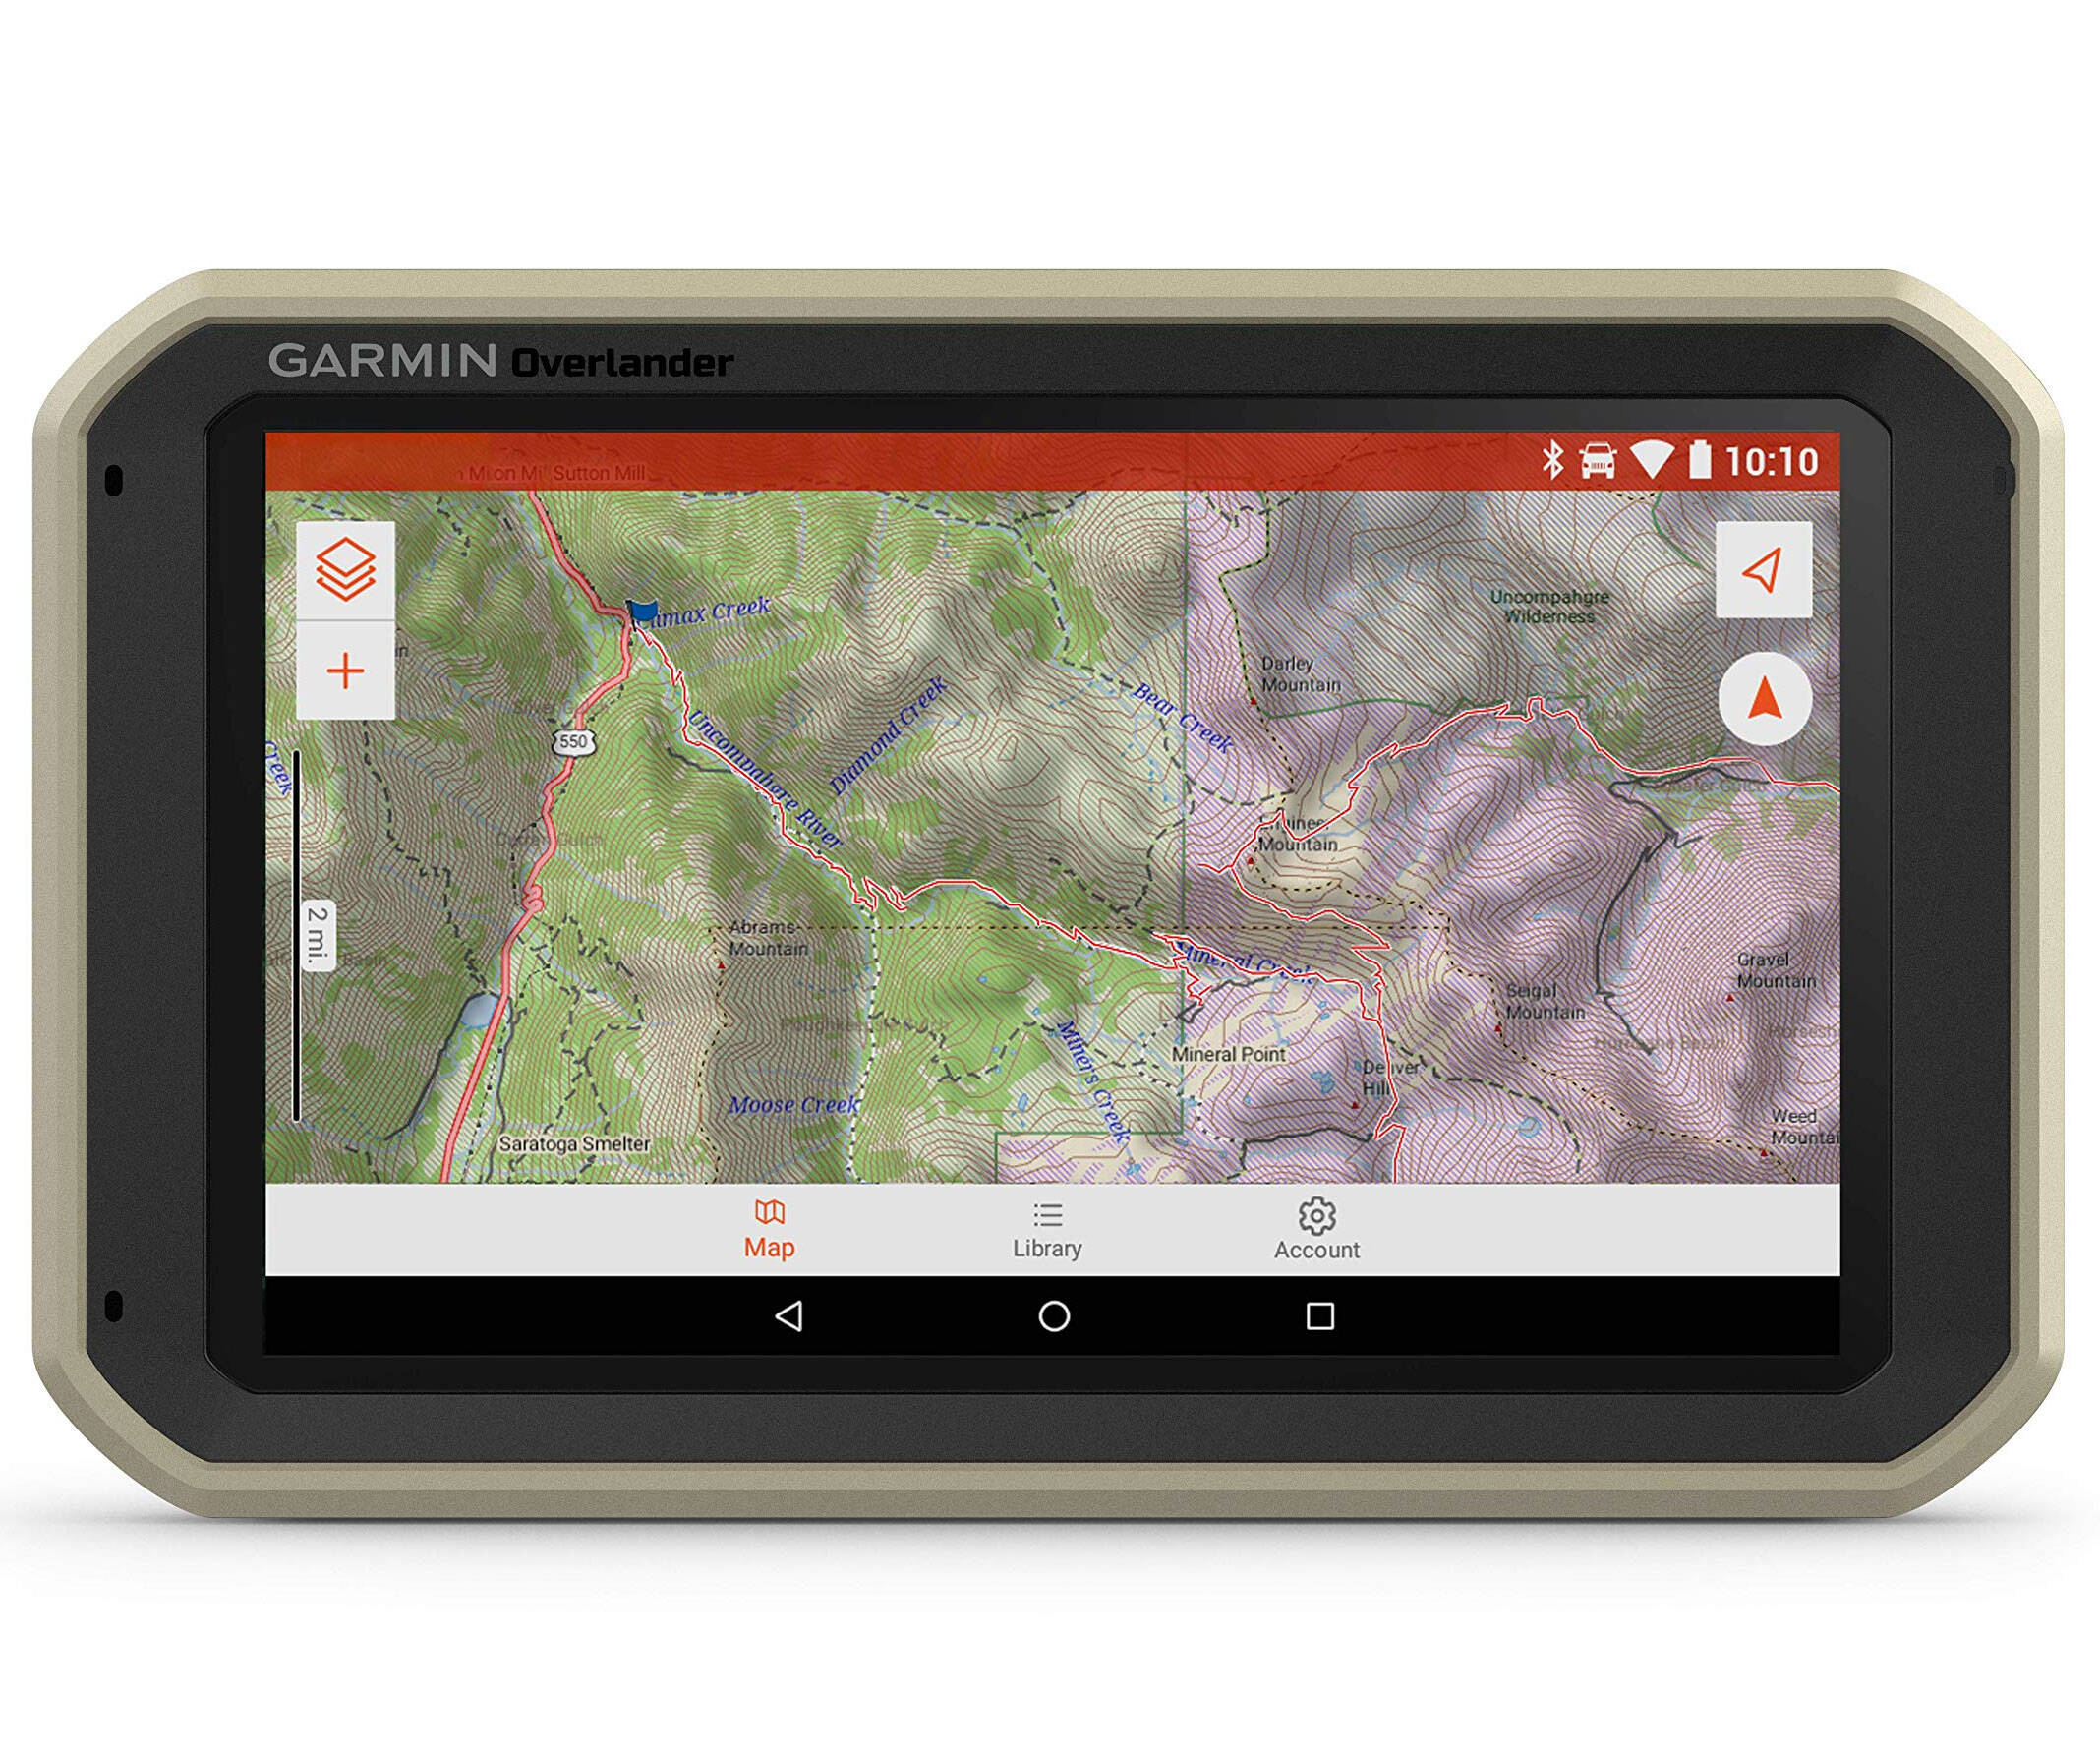 Garmin Overlander GPS - //coolthings.us